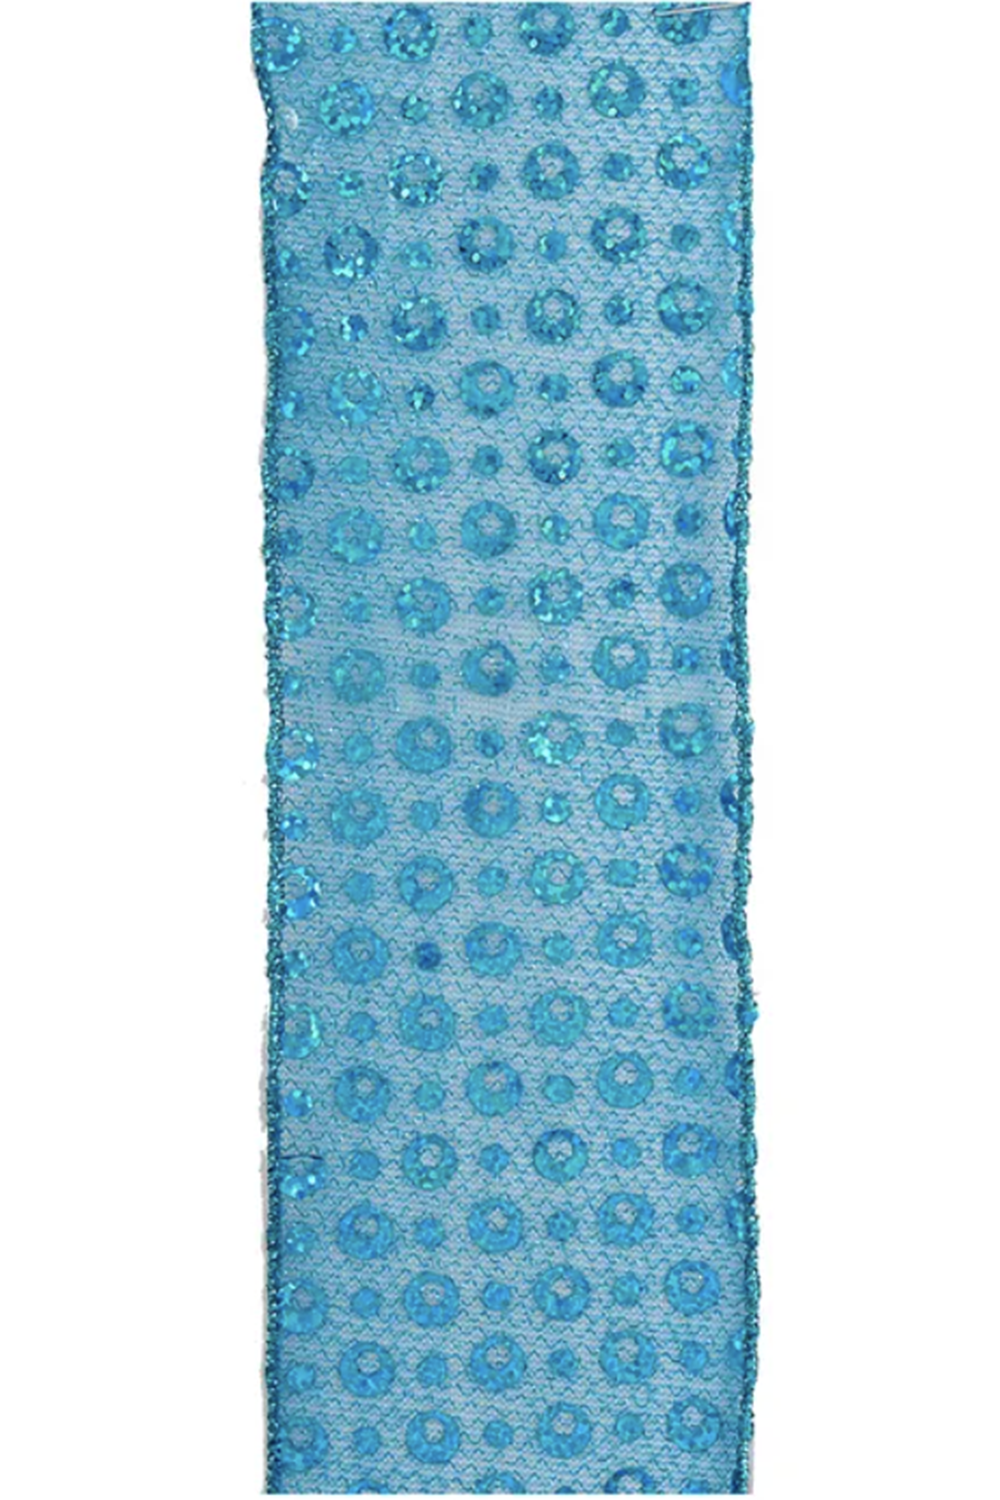 SIDEWALK SALE ITEM - Decorating Ribbon - Woven Deep Blue